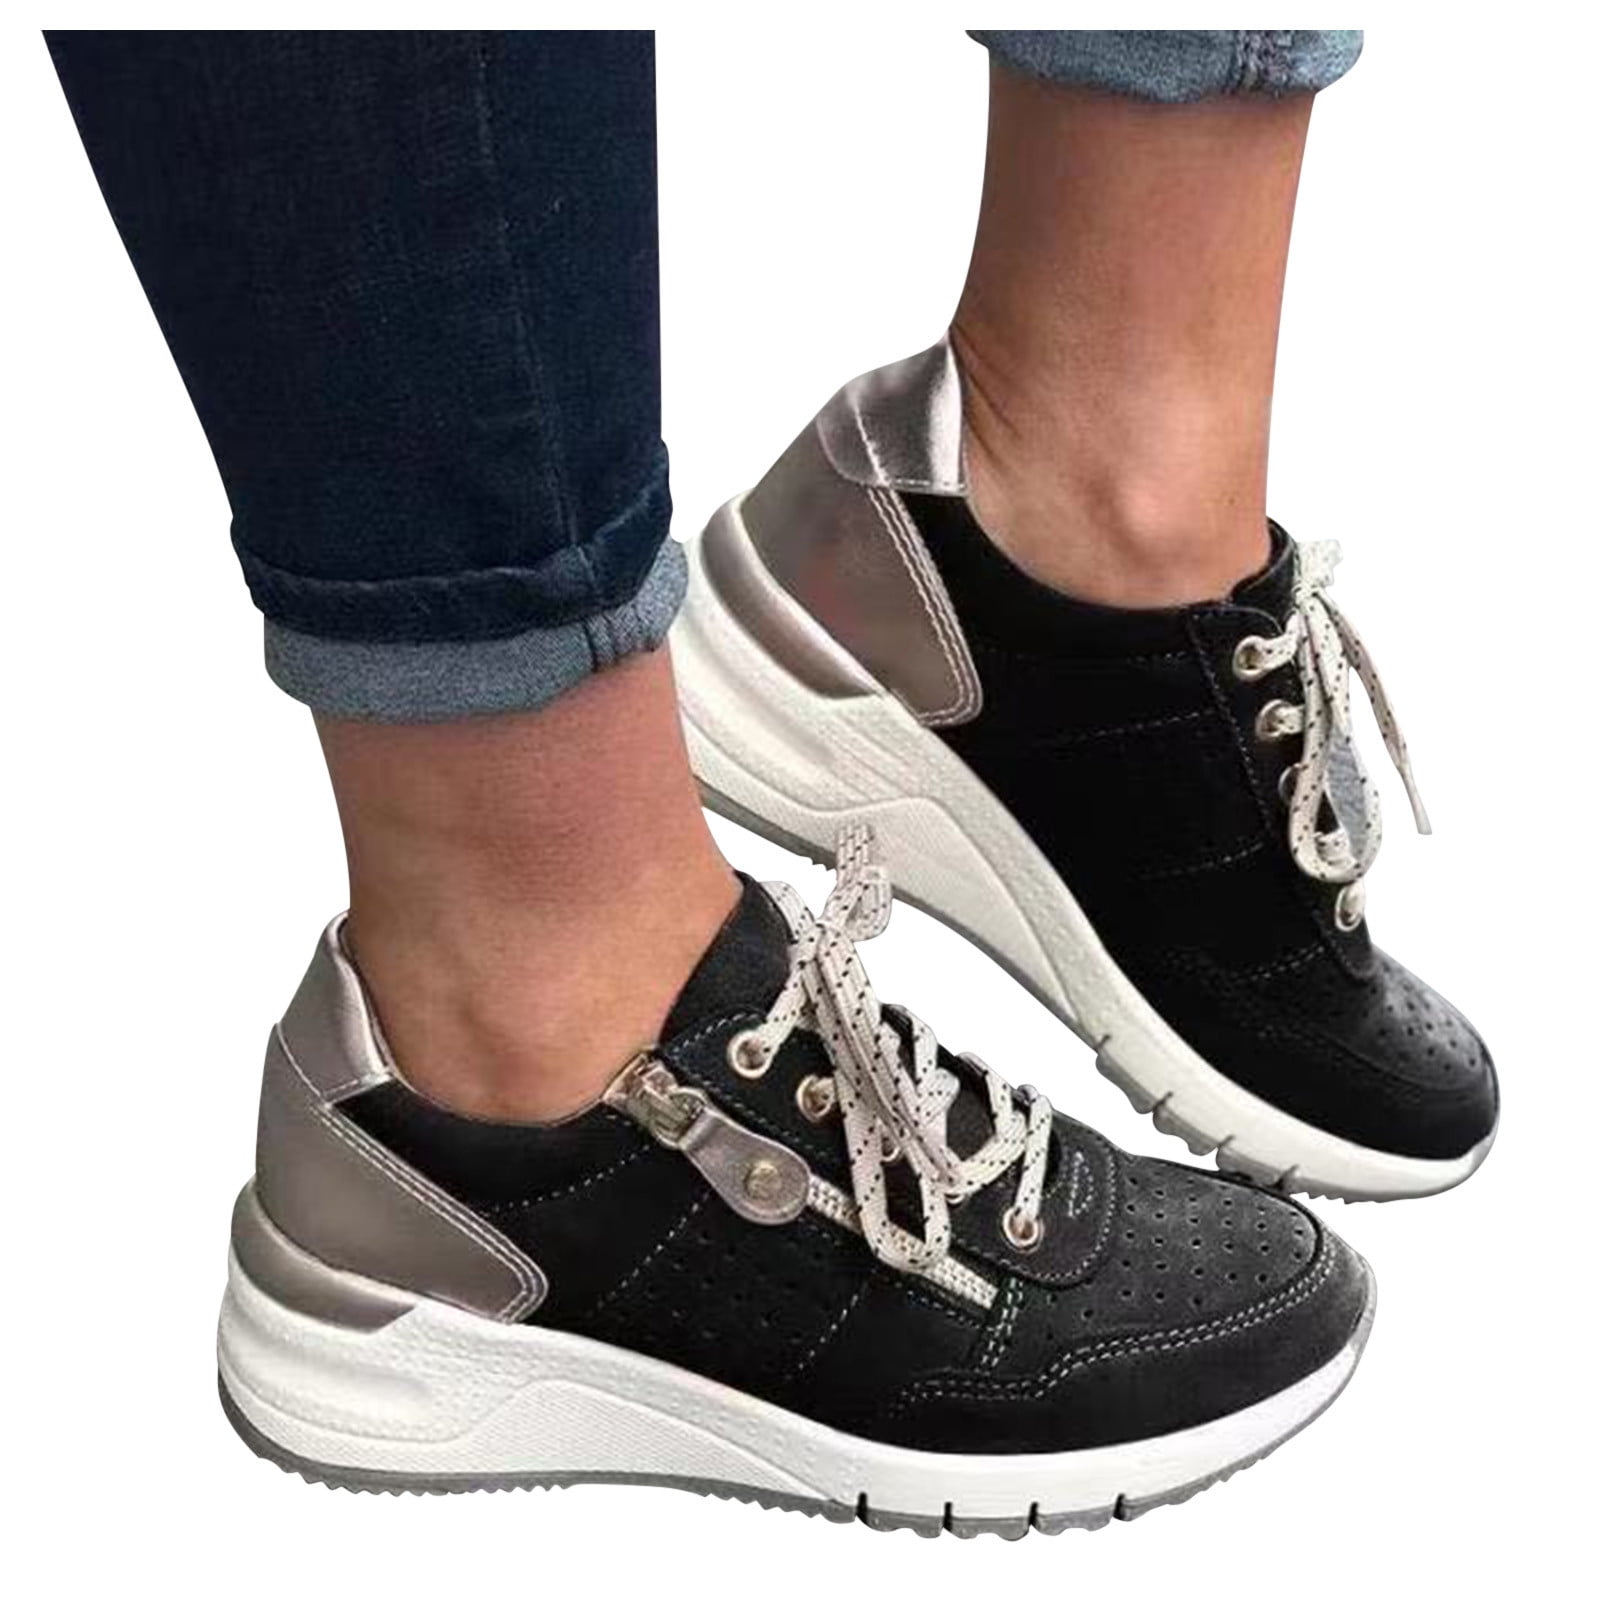 YOTAMI Women's Comfy Sneakers Fashion Casual Increased Shoes Black 8.5 Walmart.com